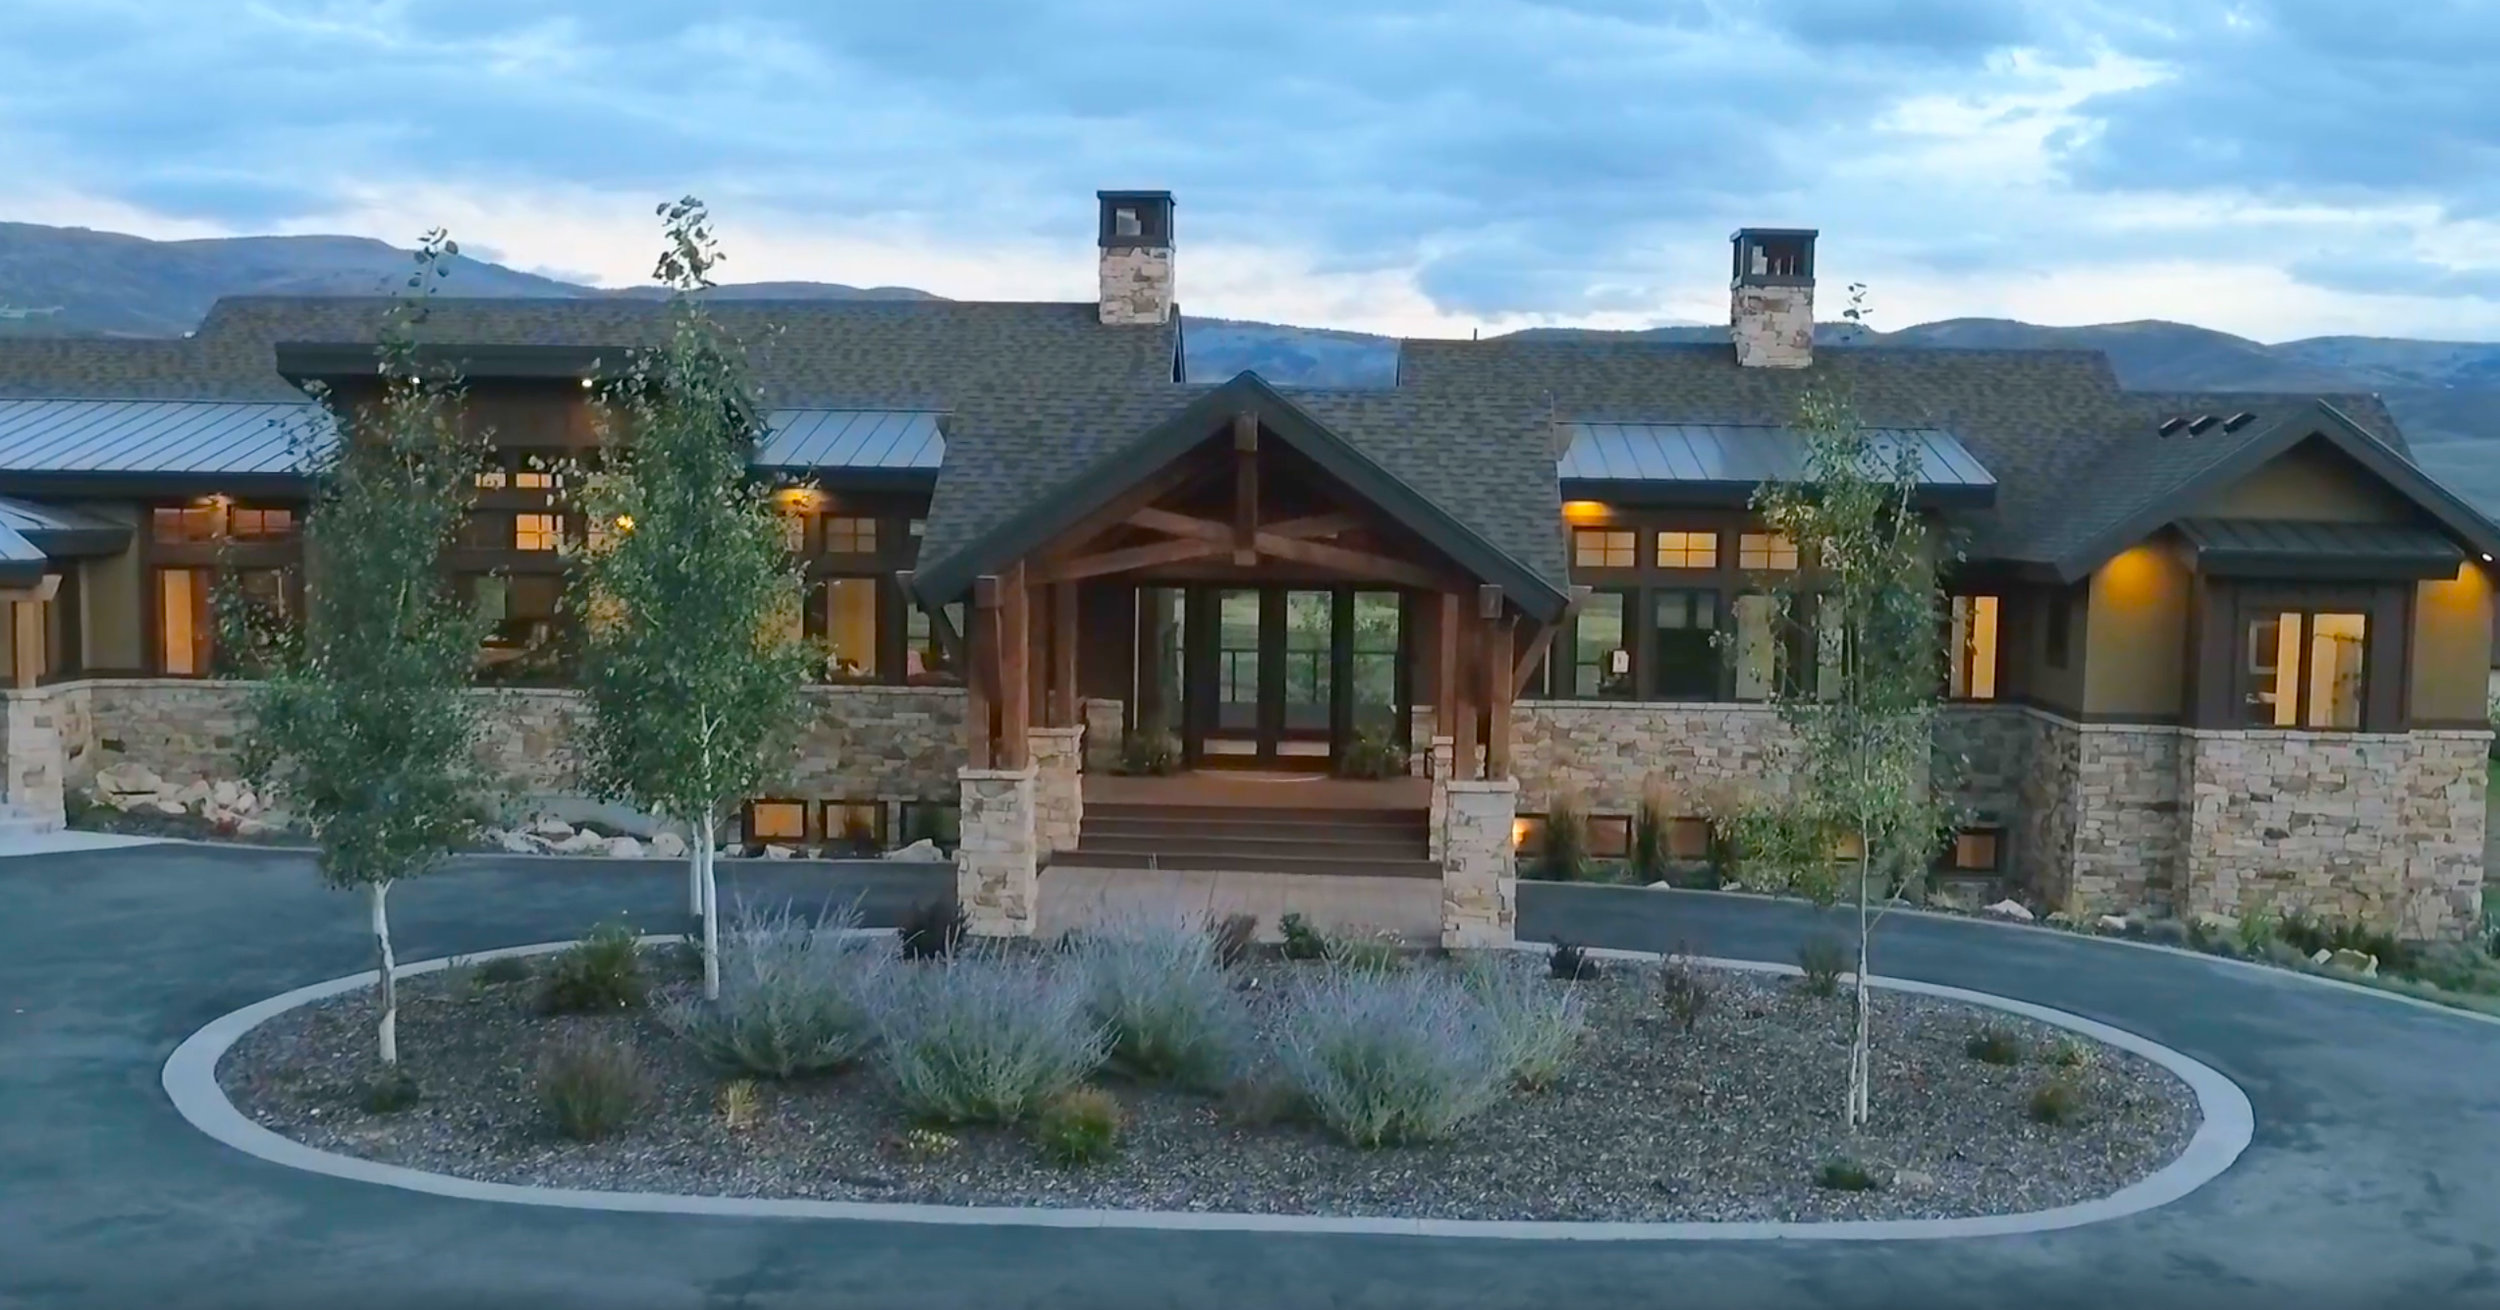  We build award winning custom homes in Utah   Everlast Custom Homes    CONTACT US  